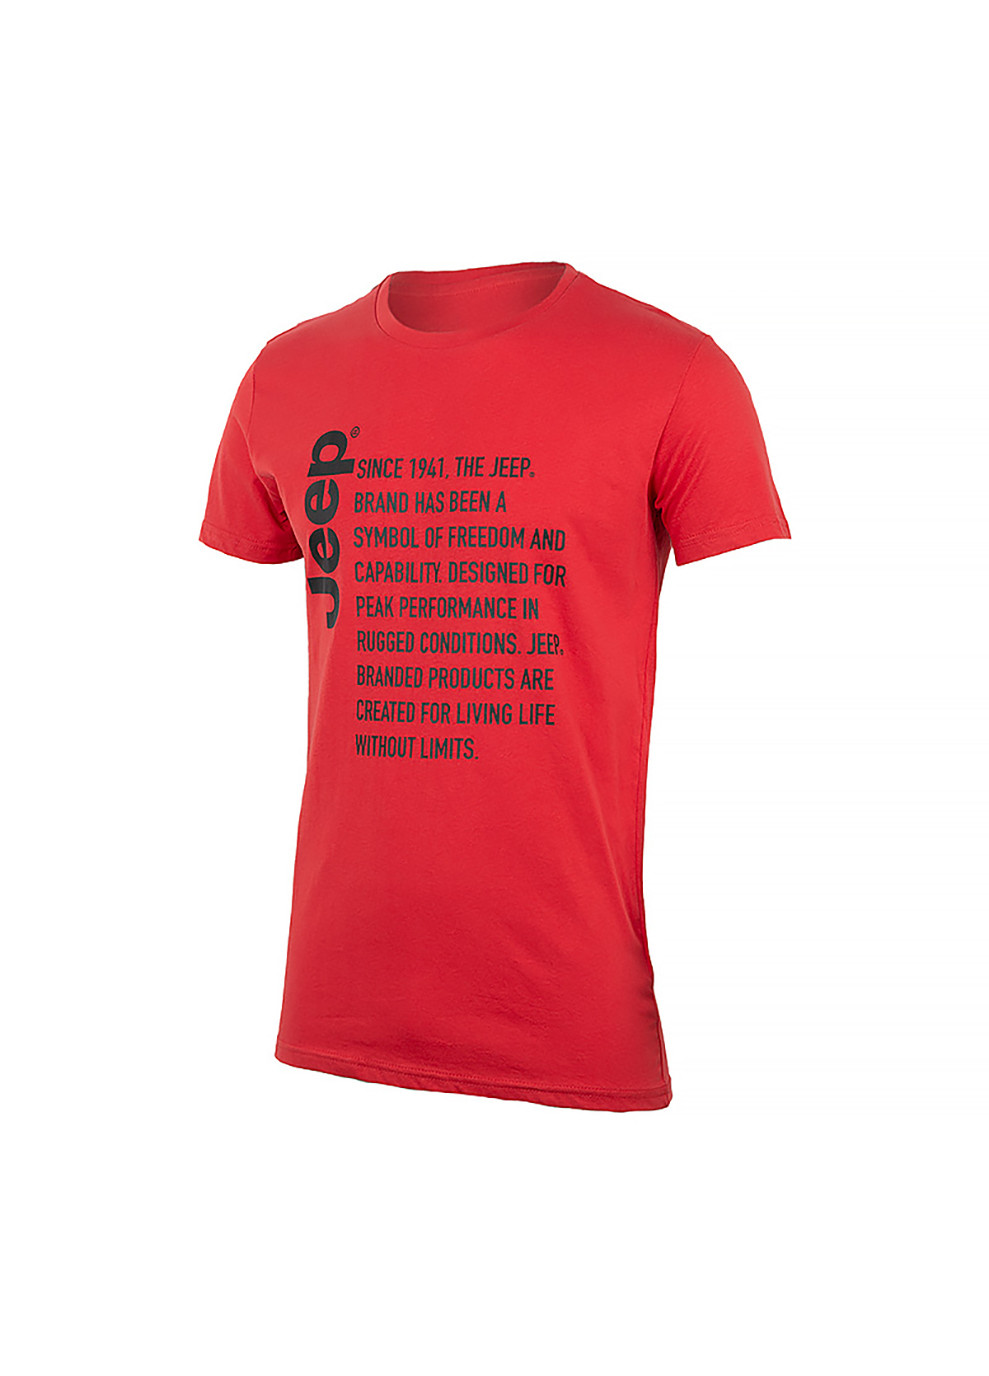 Красная мужская футболка t-shirt since 1941 красный xl (o102591-r699 xl) Jeep